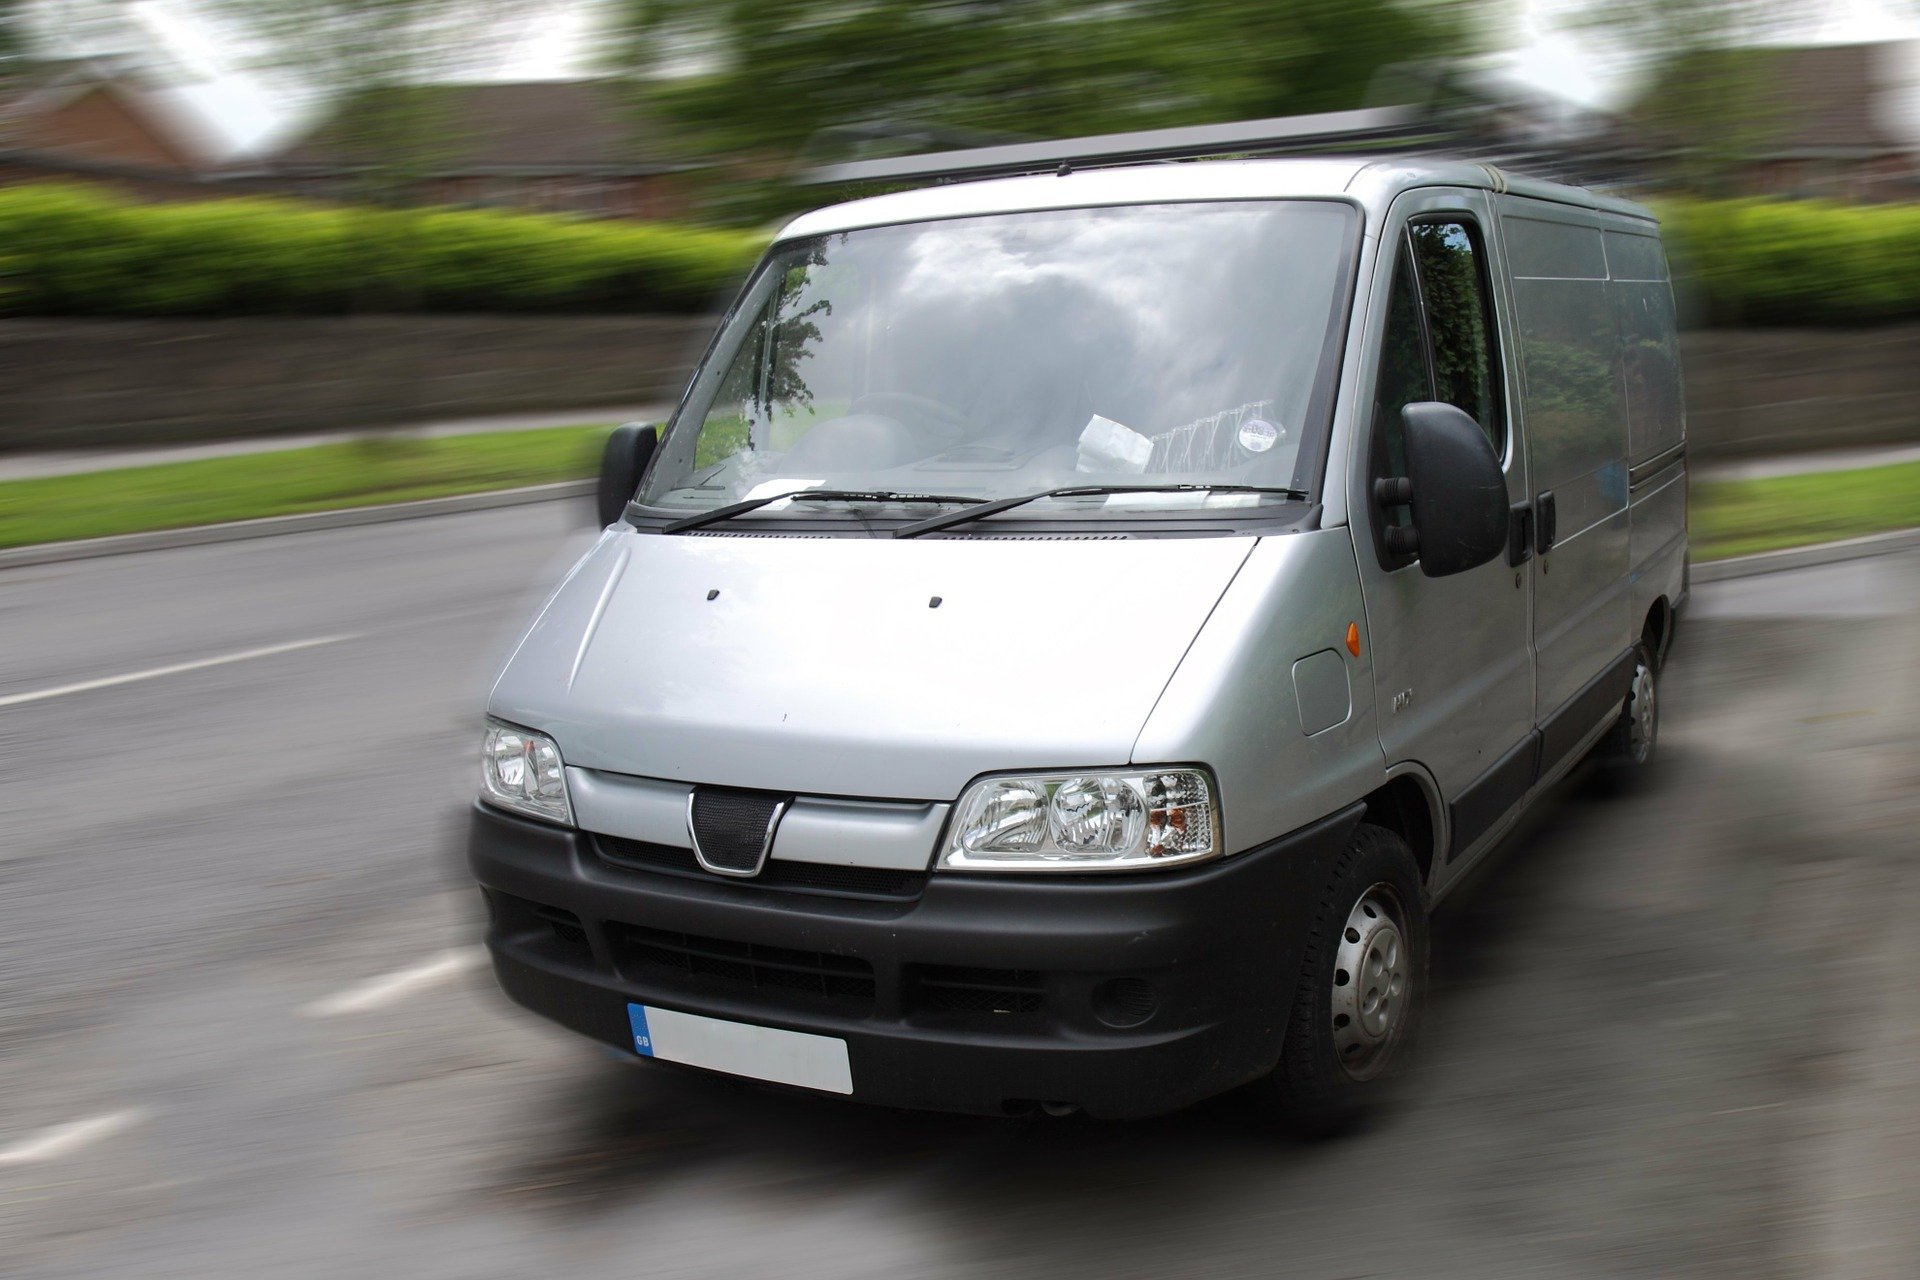 NEWS | Thieves are targeting vans in Hereford